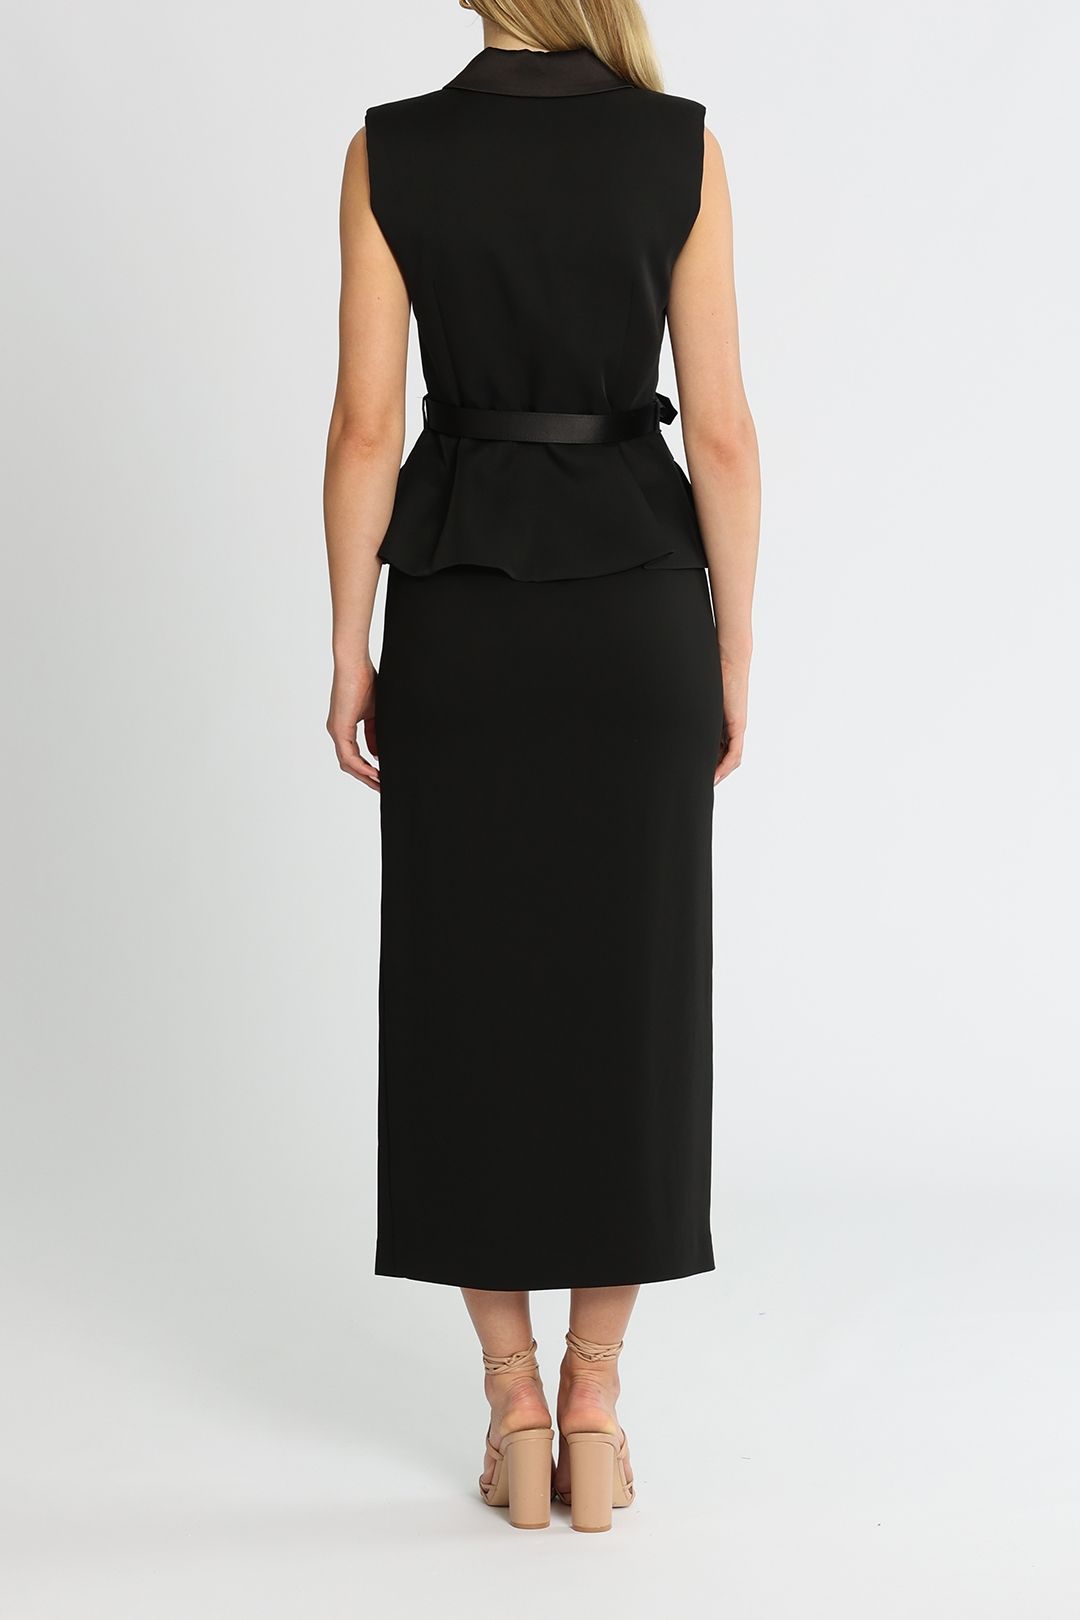 Tailored Midi Dress Black Peplum